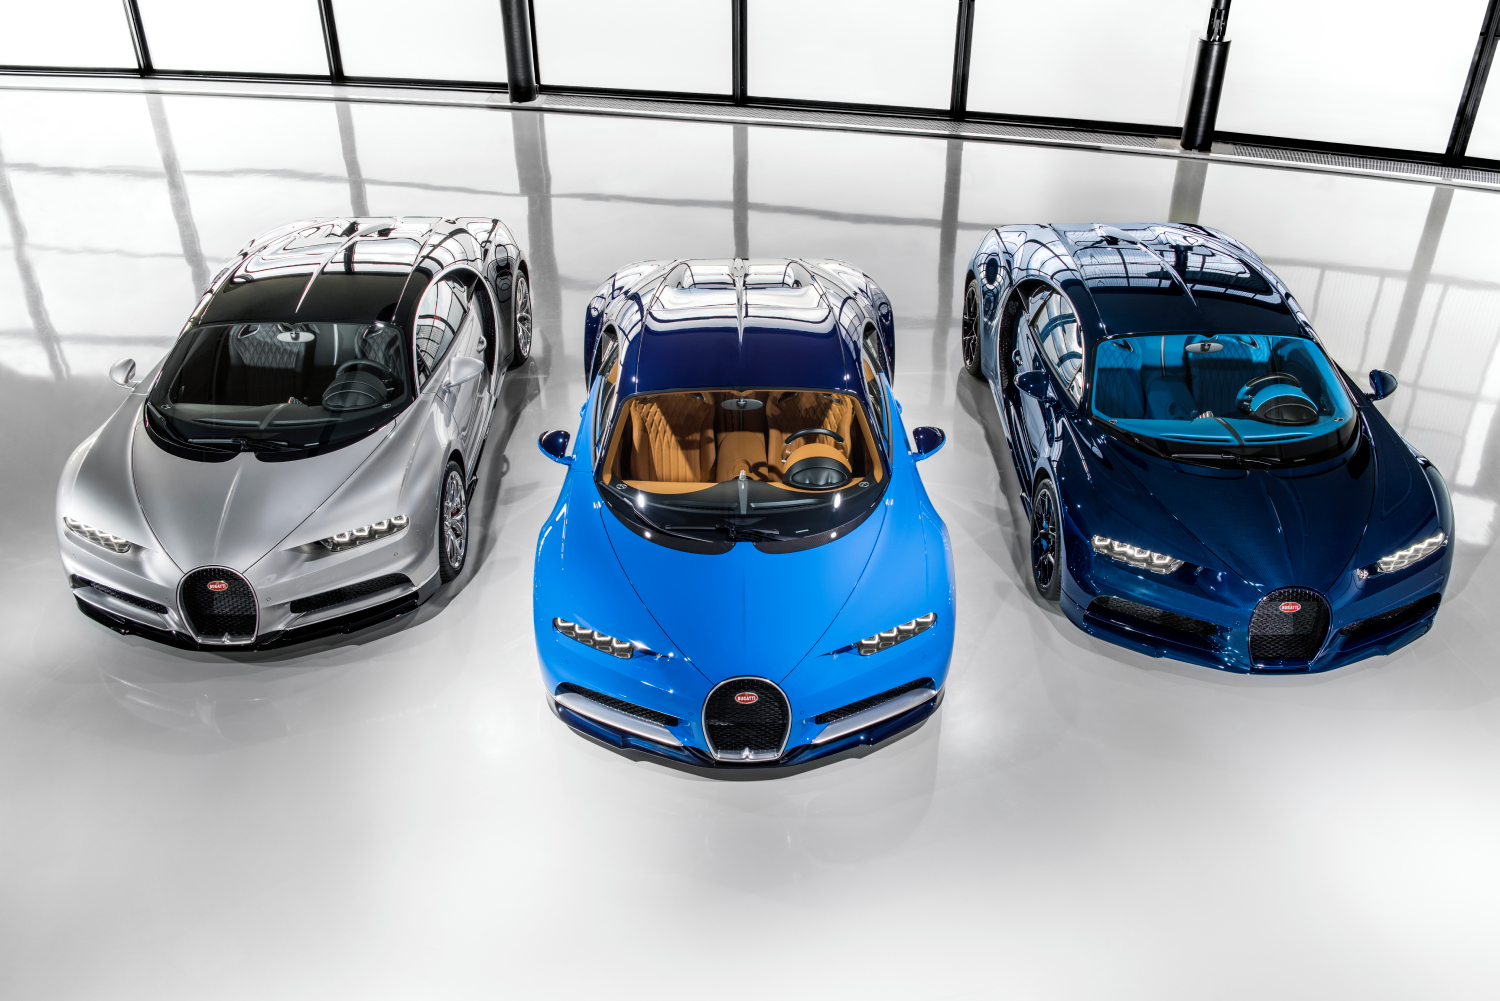 The Bugatti Chiron lineup, Chiron Pur Sport and Super Sport